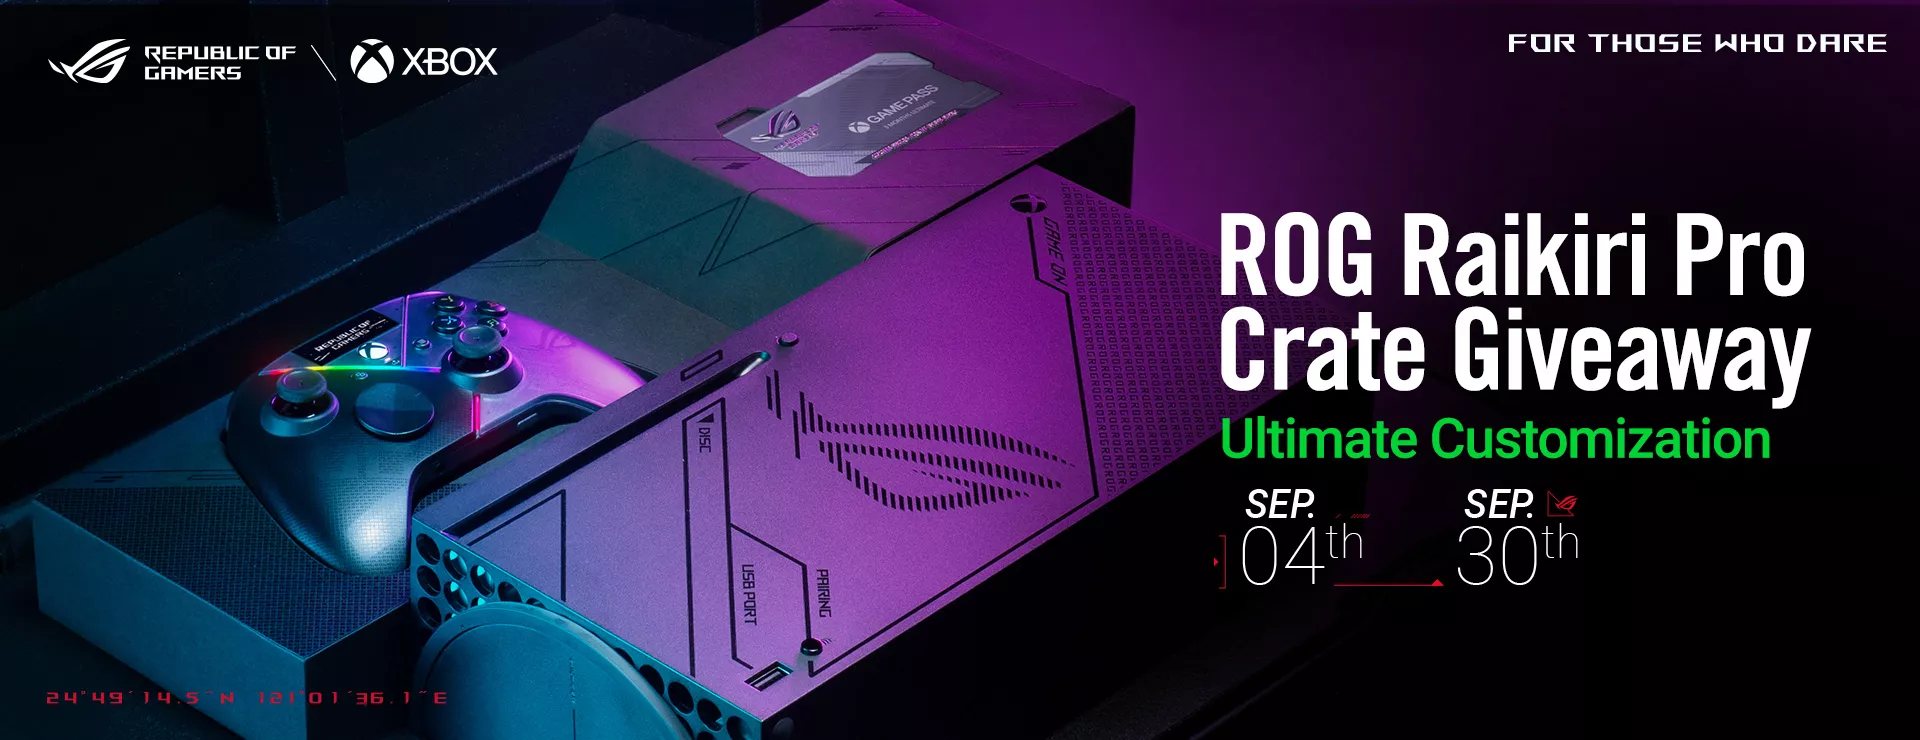 The unboxing view of ROG Raikiri Pro Crate, with ROG Raikiri Pro, custom Xbox series X and ultimate game pass card inside